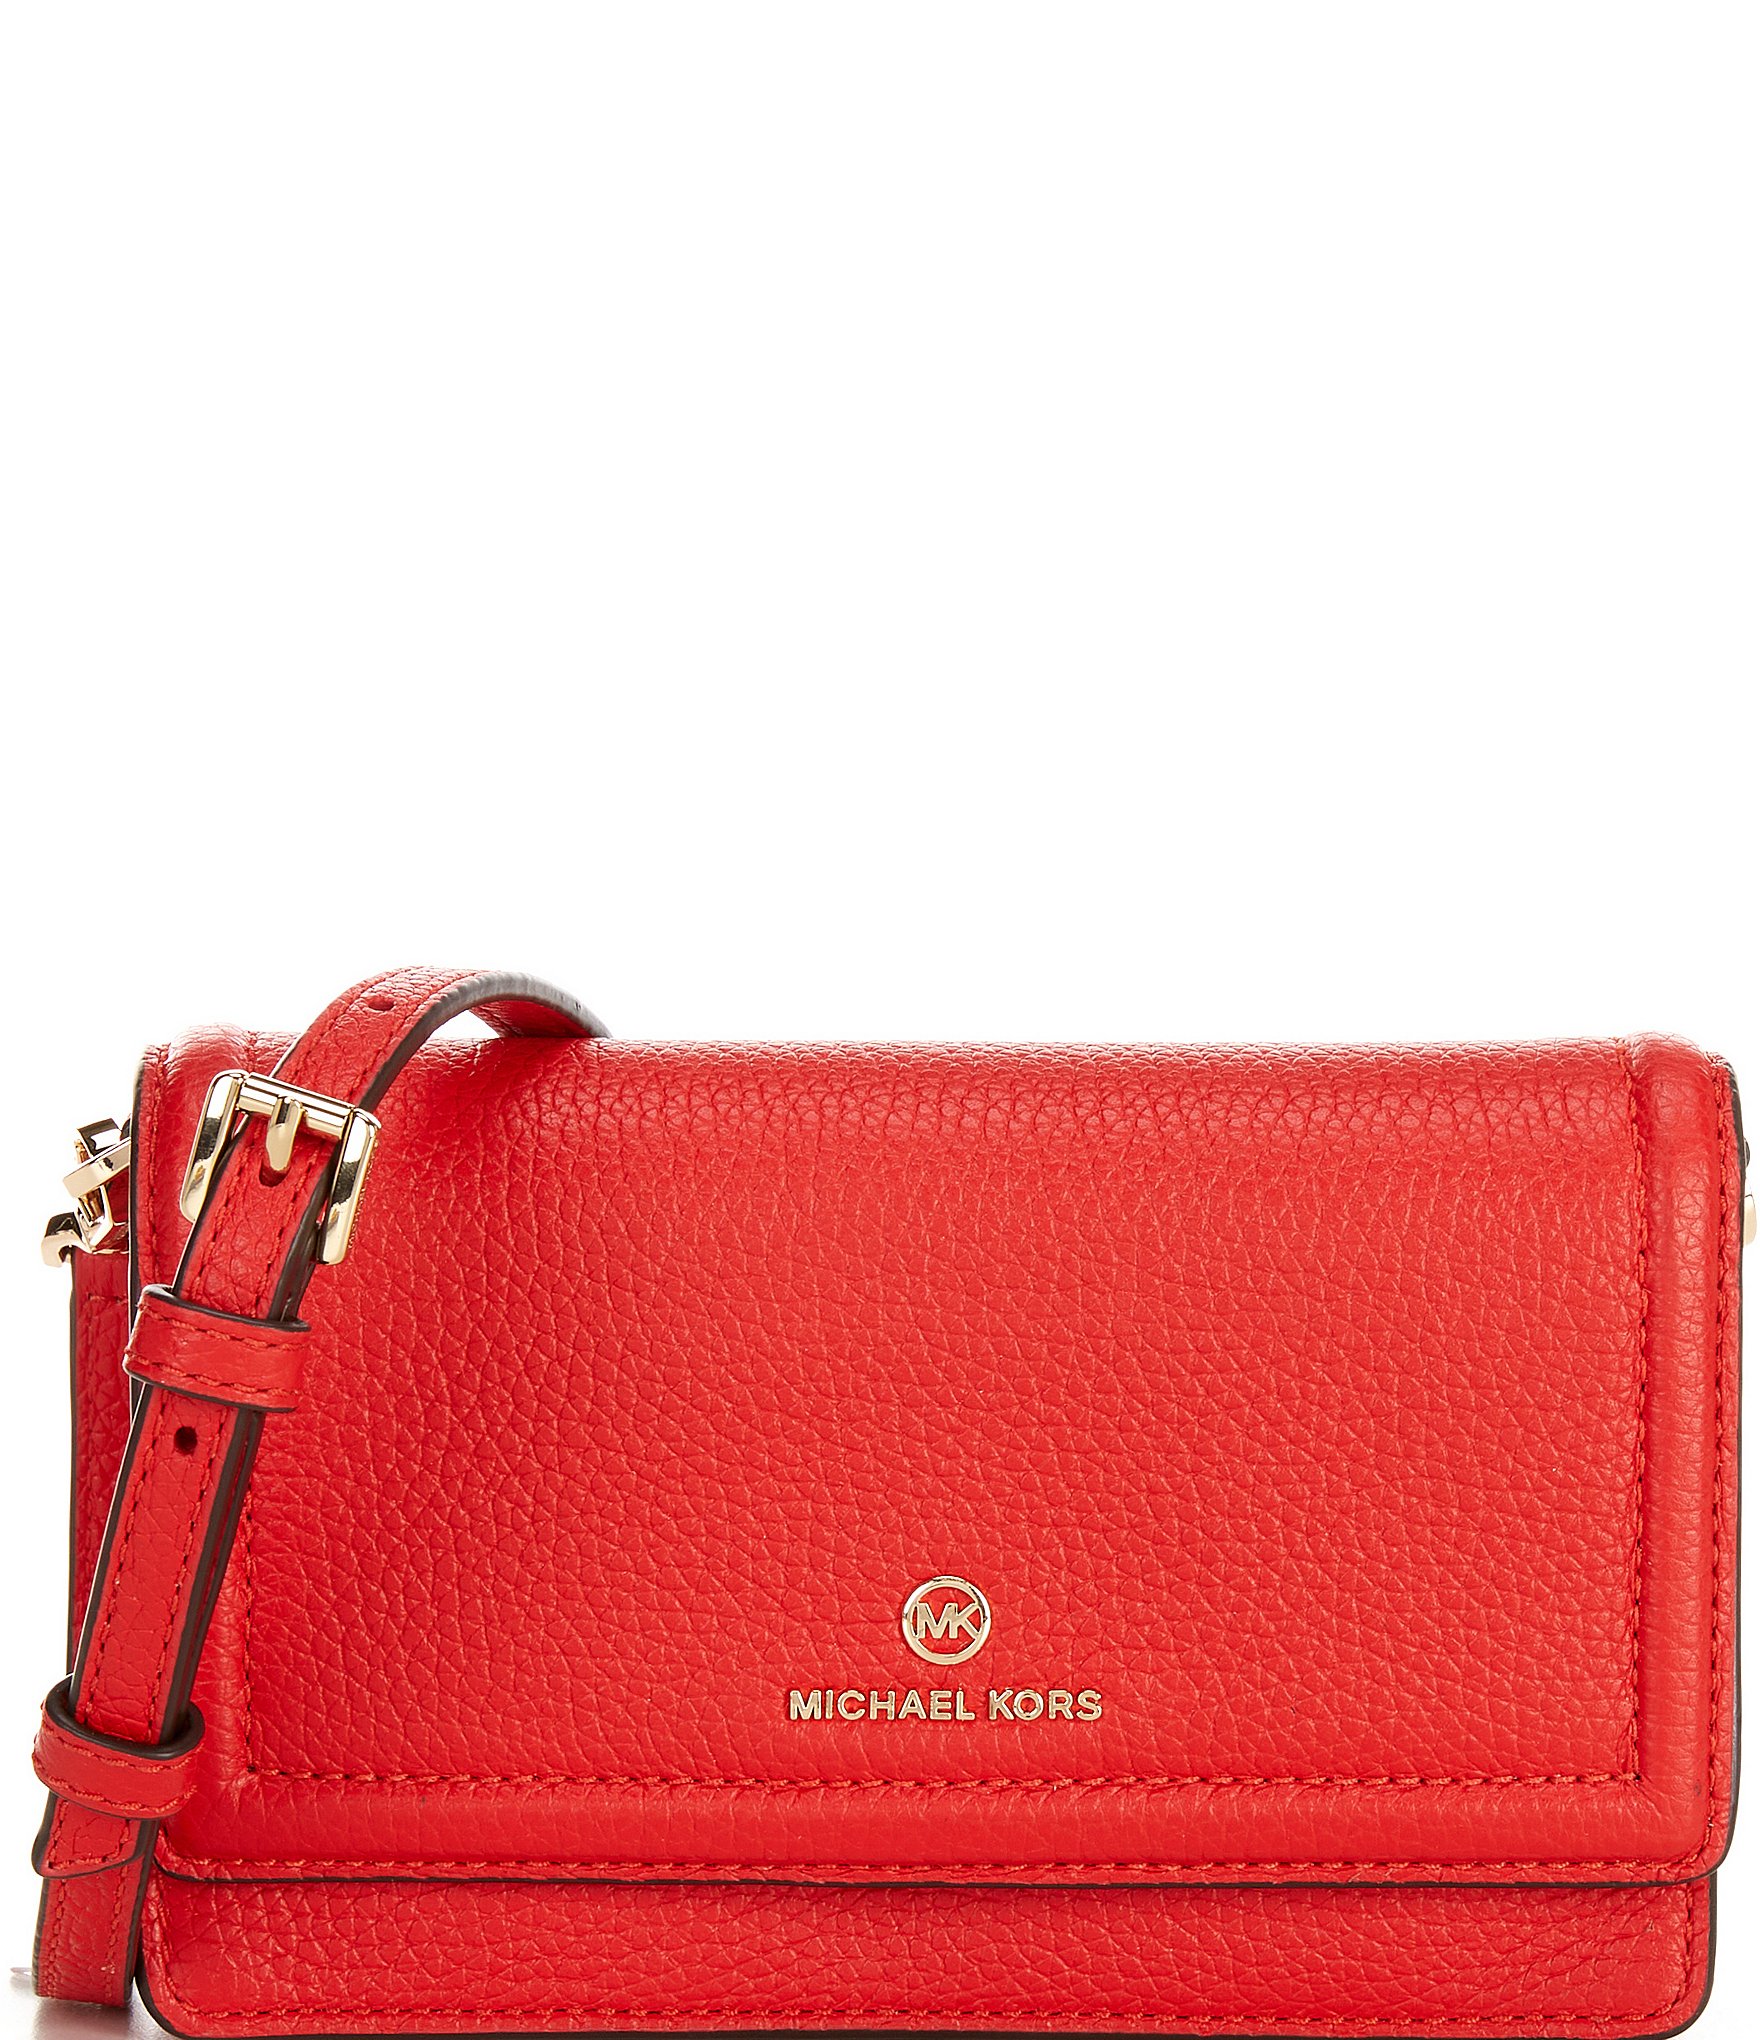 Red crossbody bag with tassel brand MICHAEL KORS — Globalbrandsstore.com/en